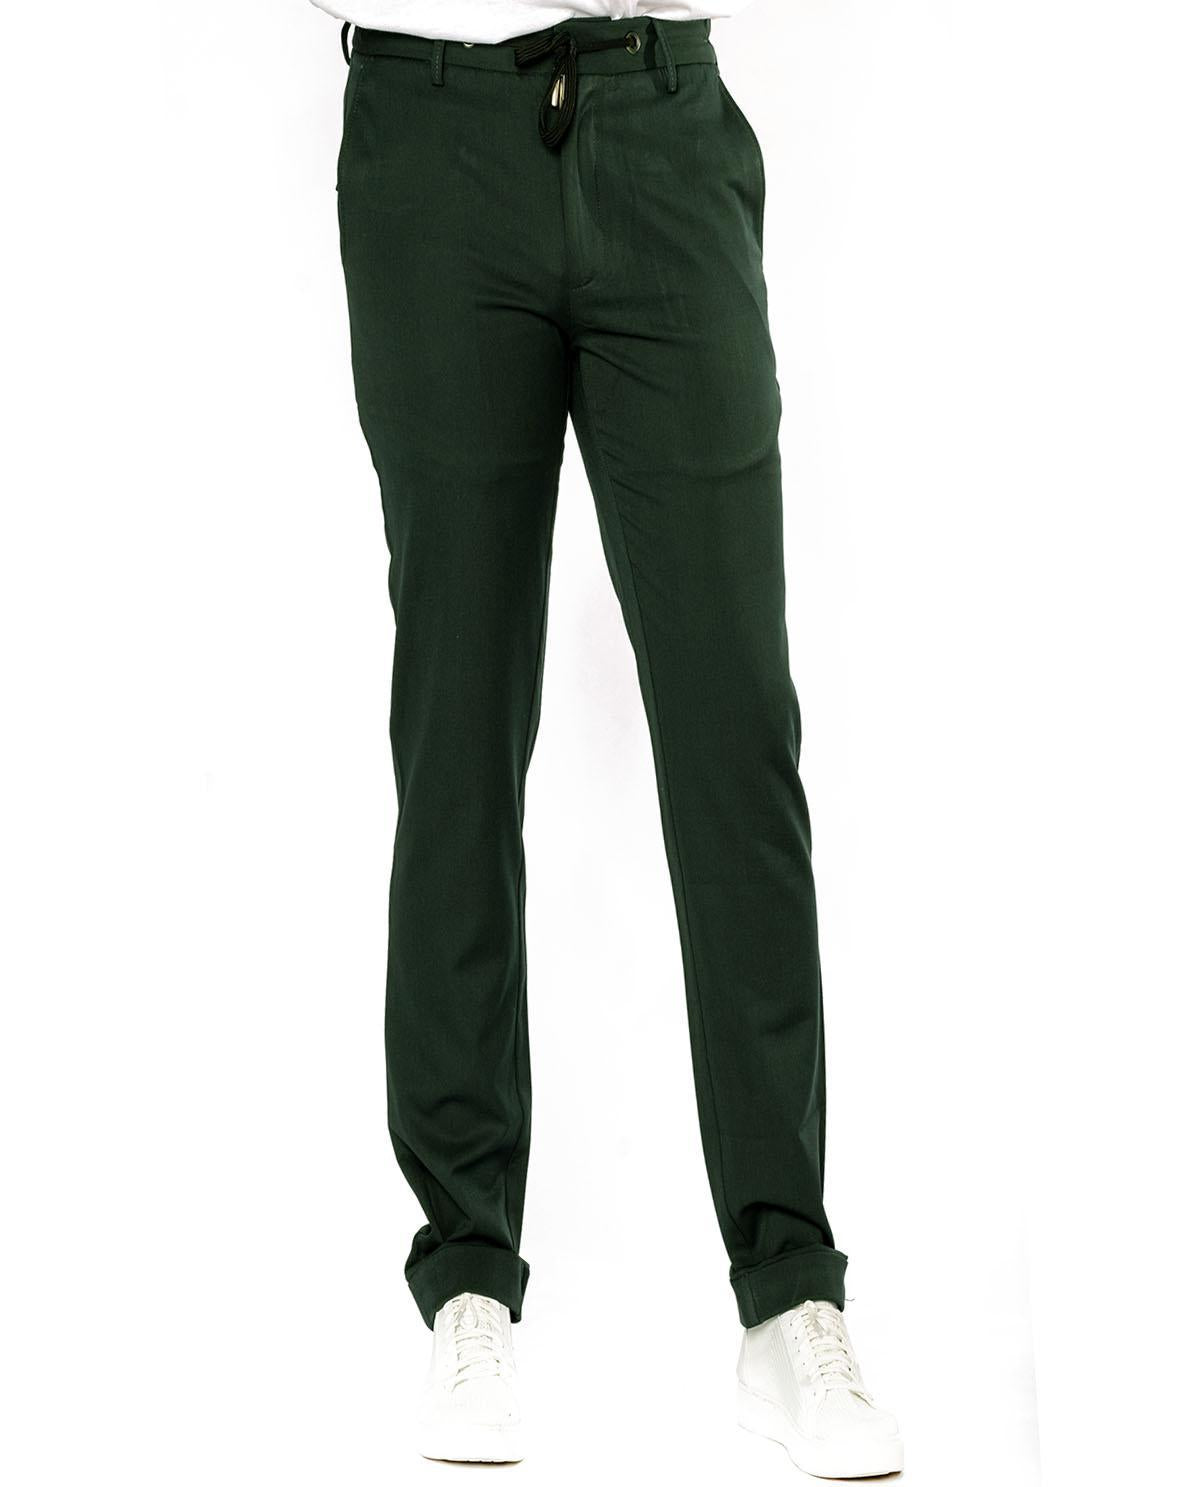 Pantalon vert avec revers